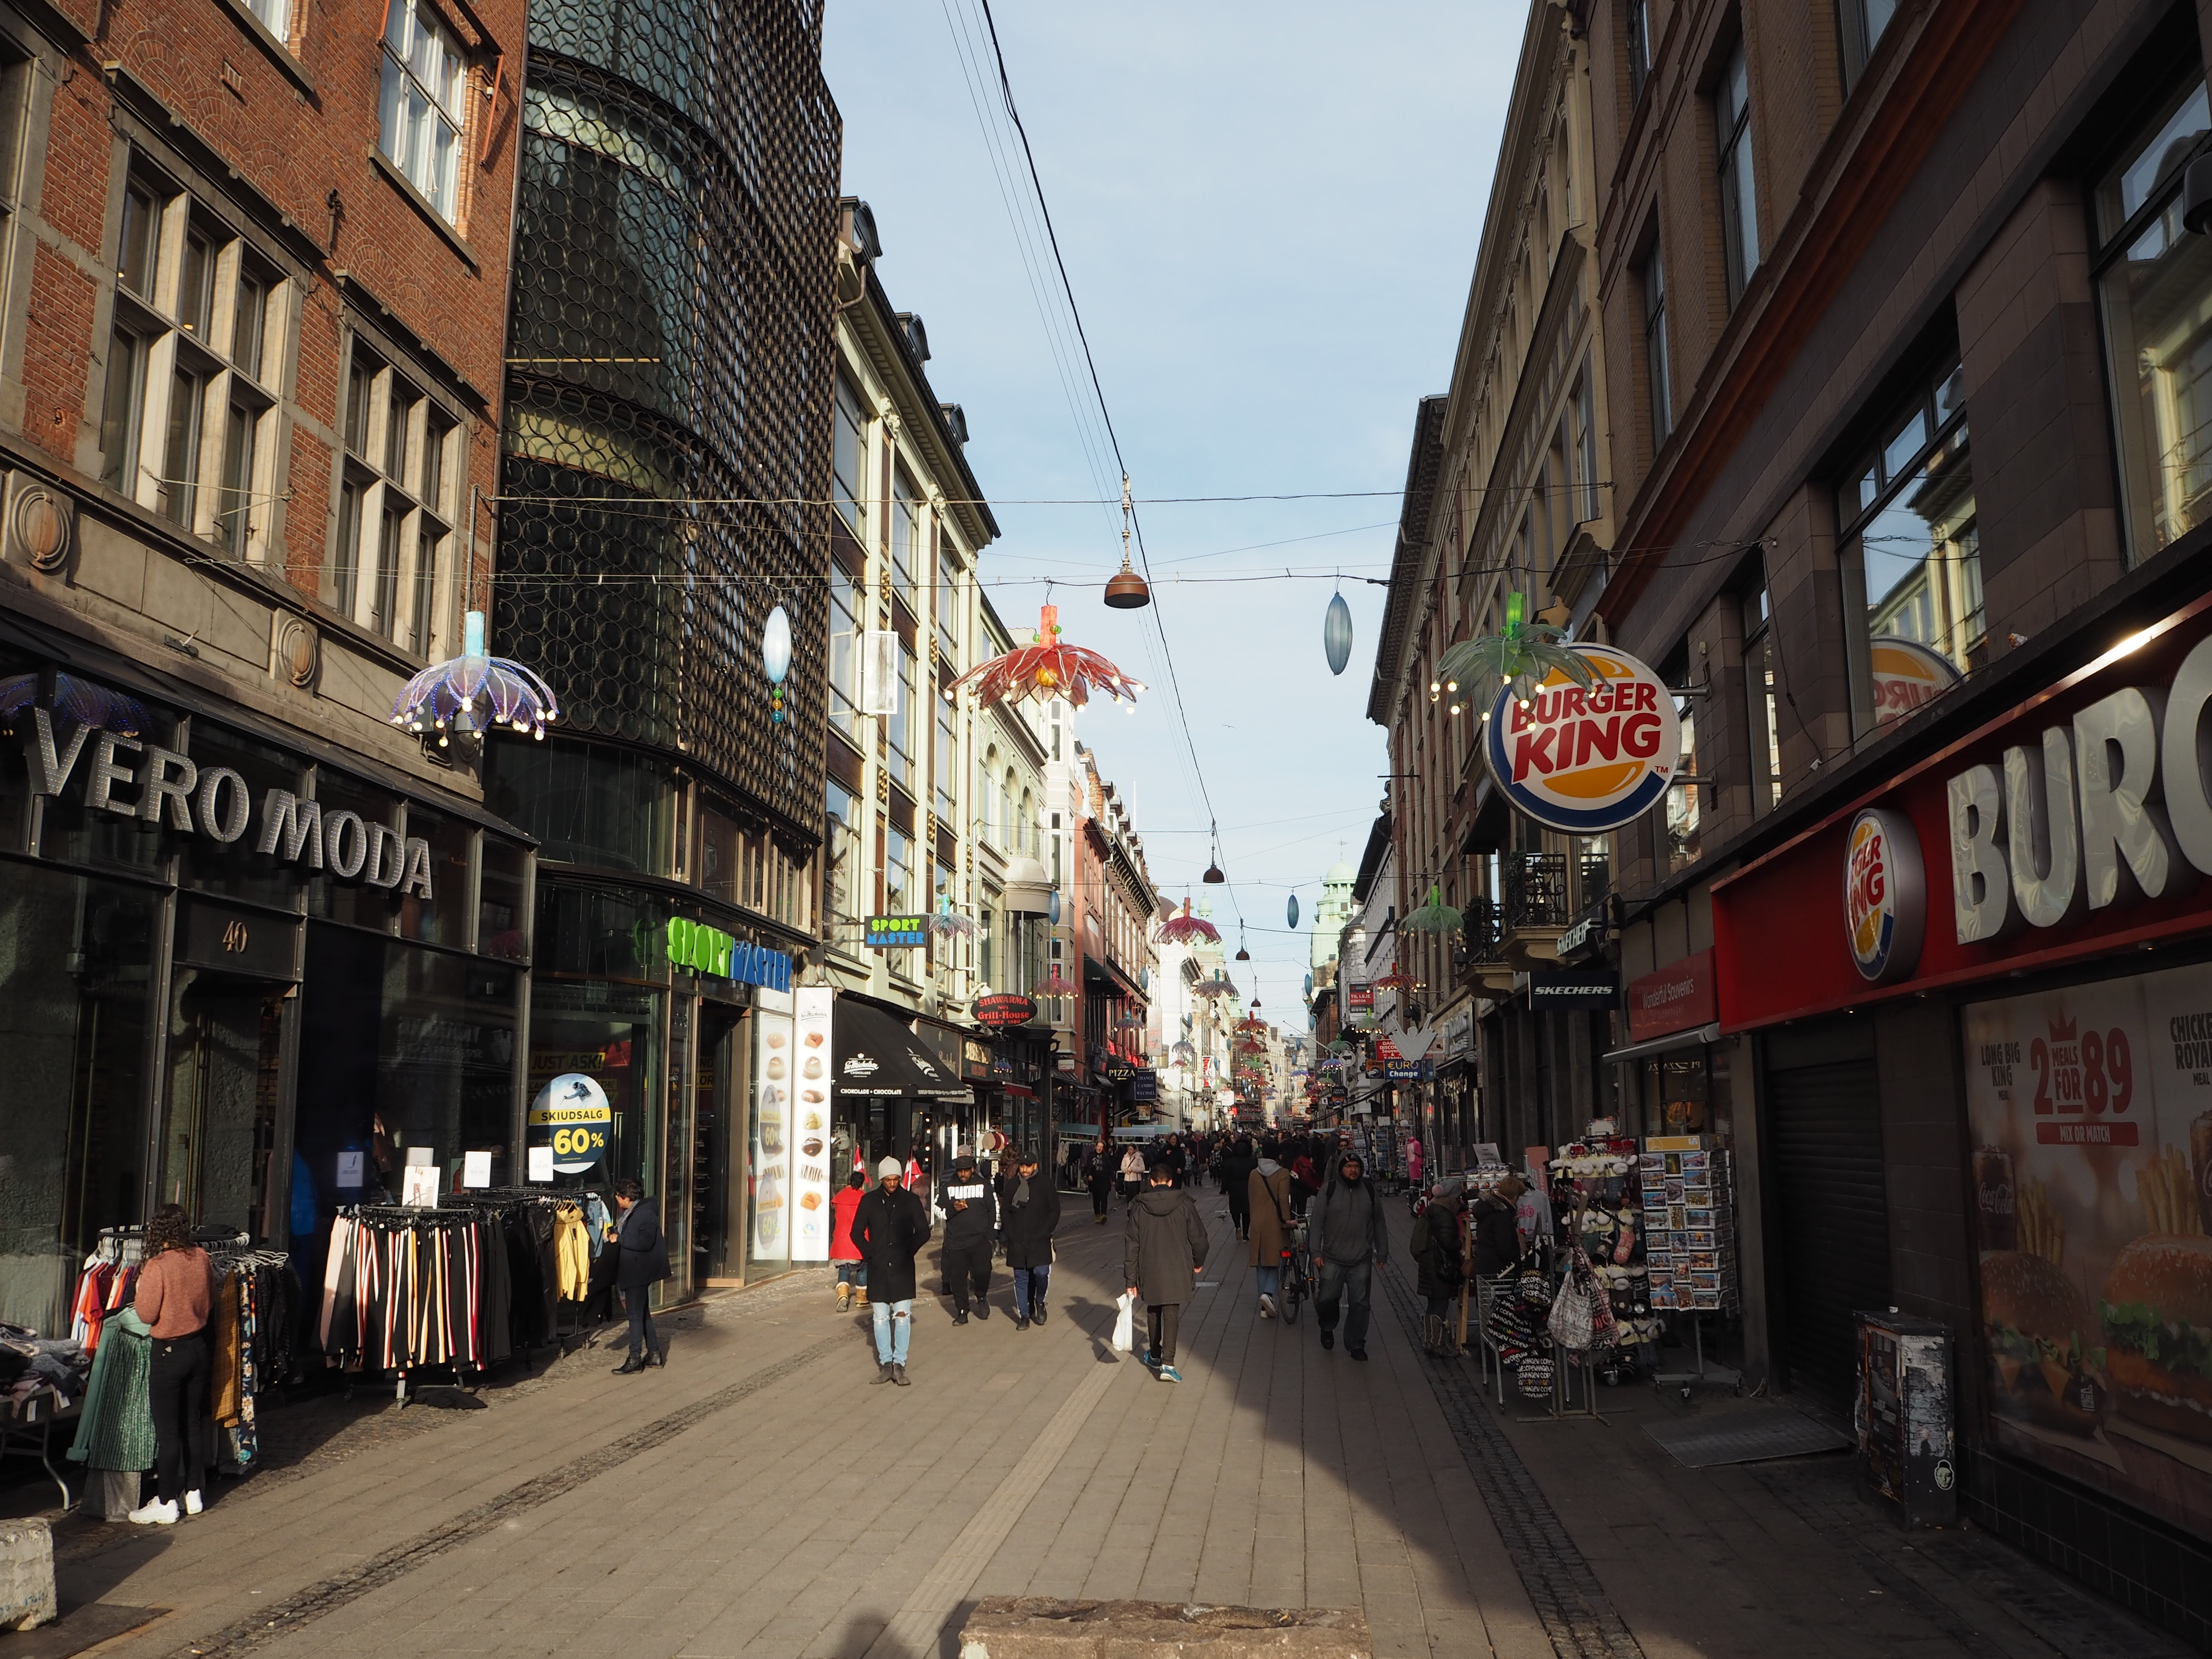 A shopping street in Copenhagen, Denmark